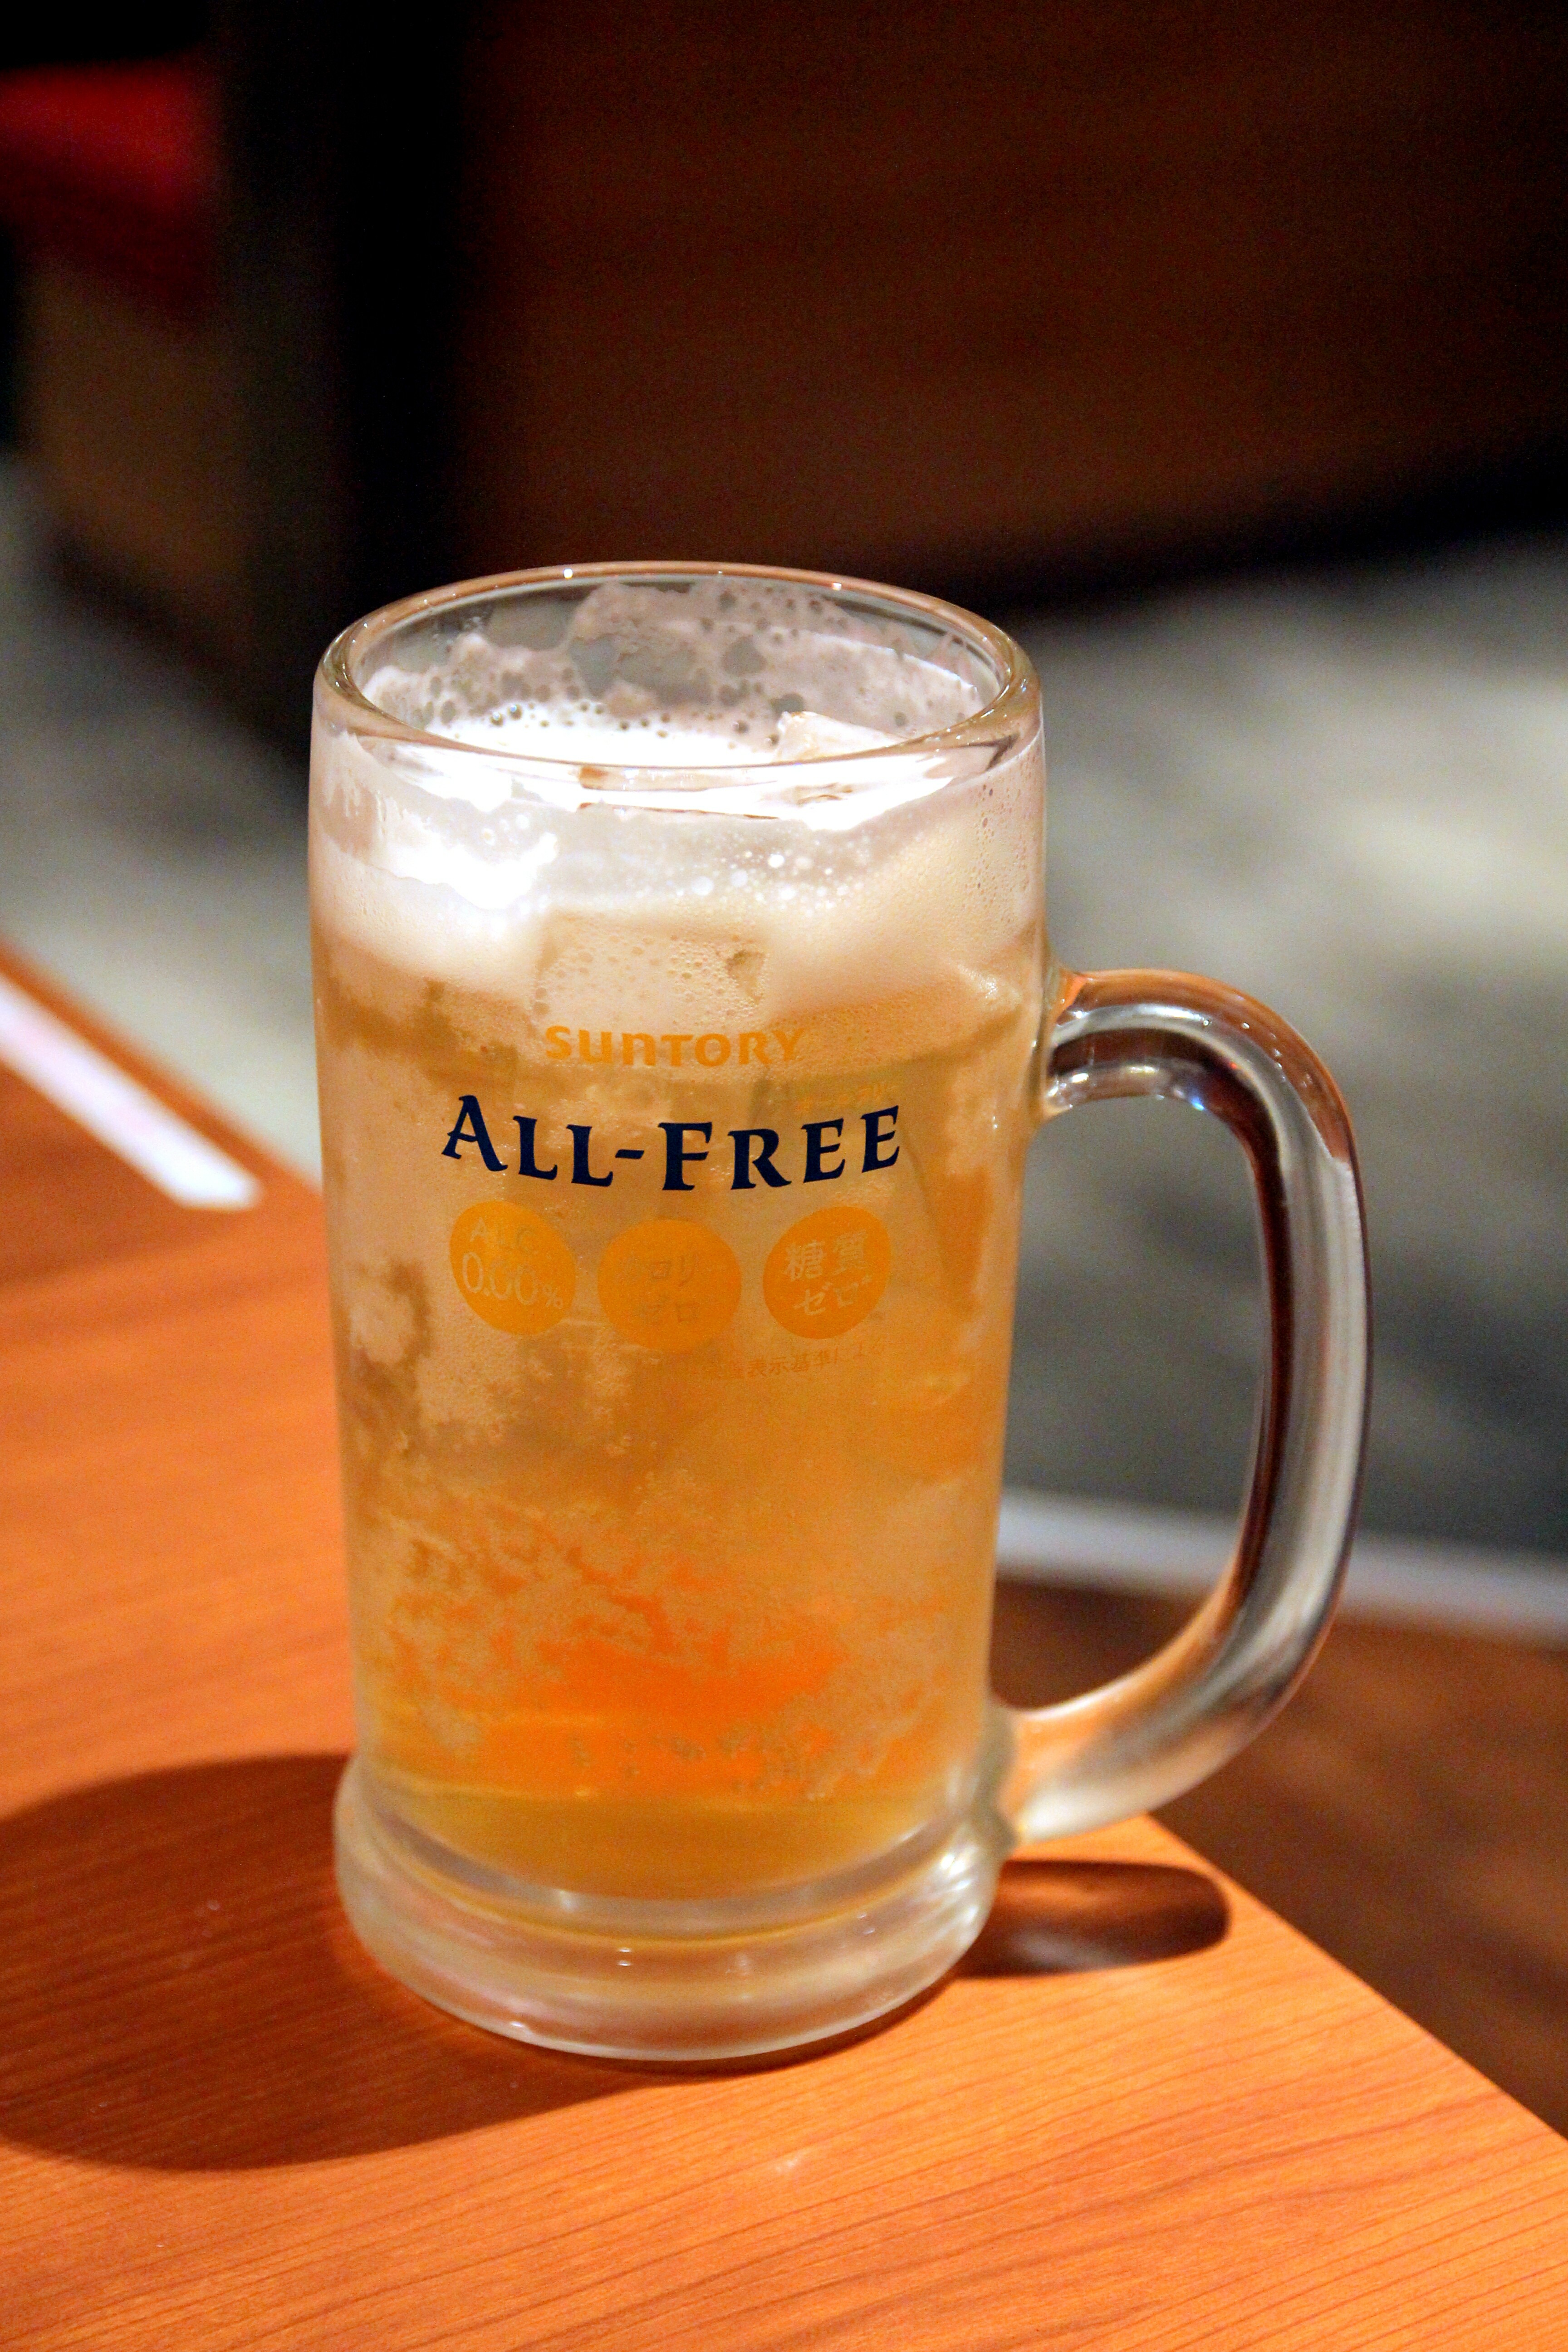 Suntory All-Free Non-Alcoholic Malt Beverage (¥378)